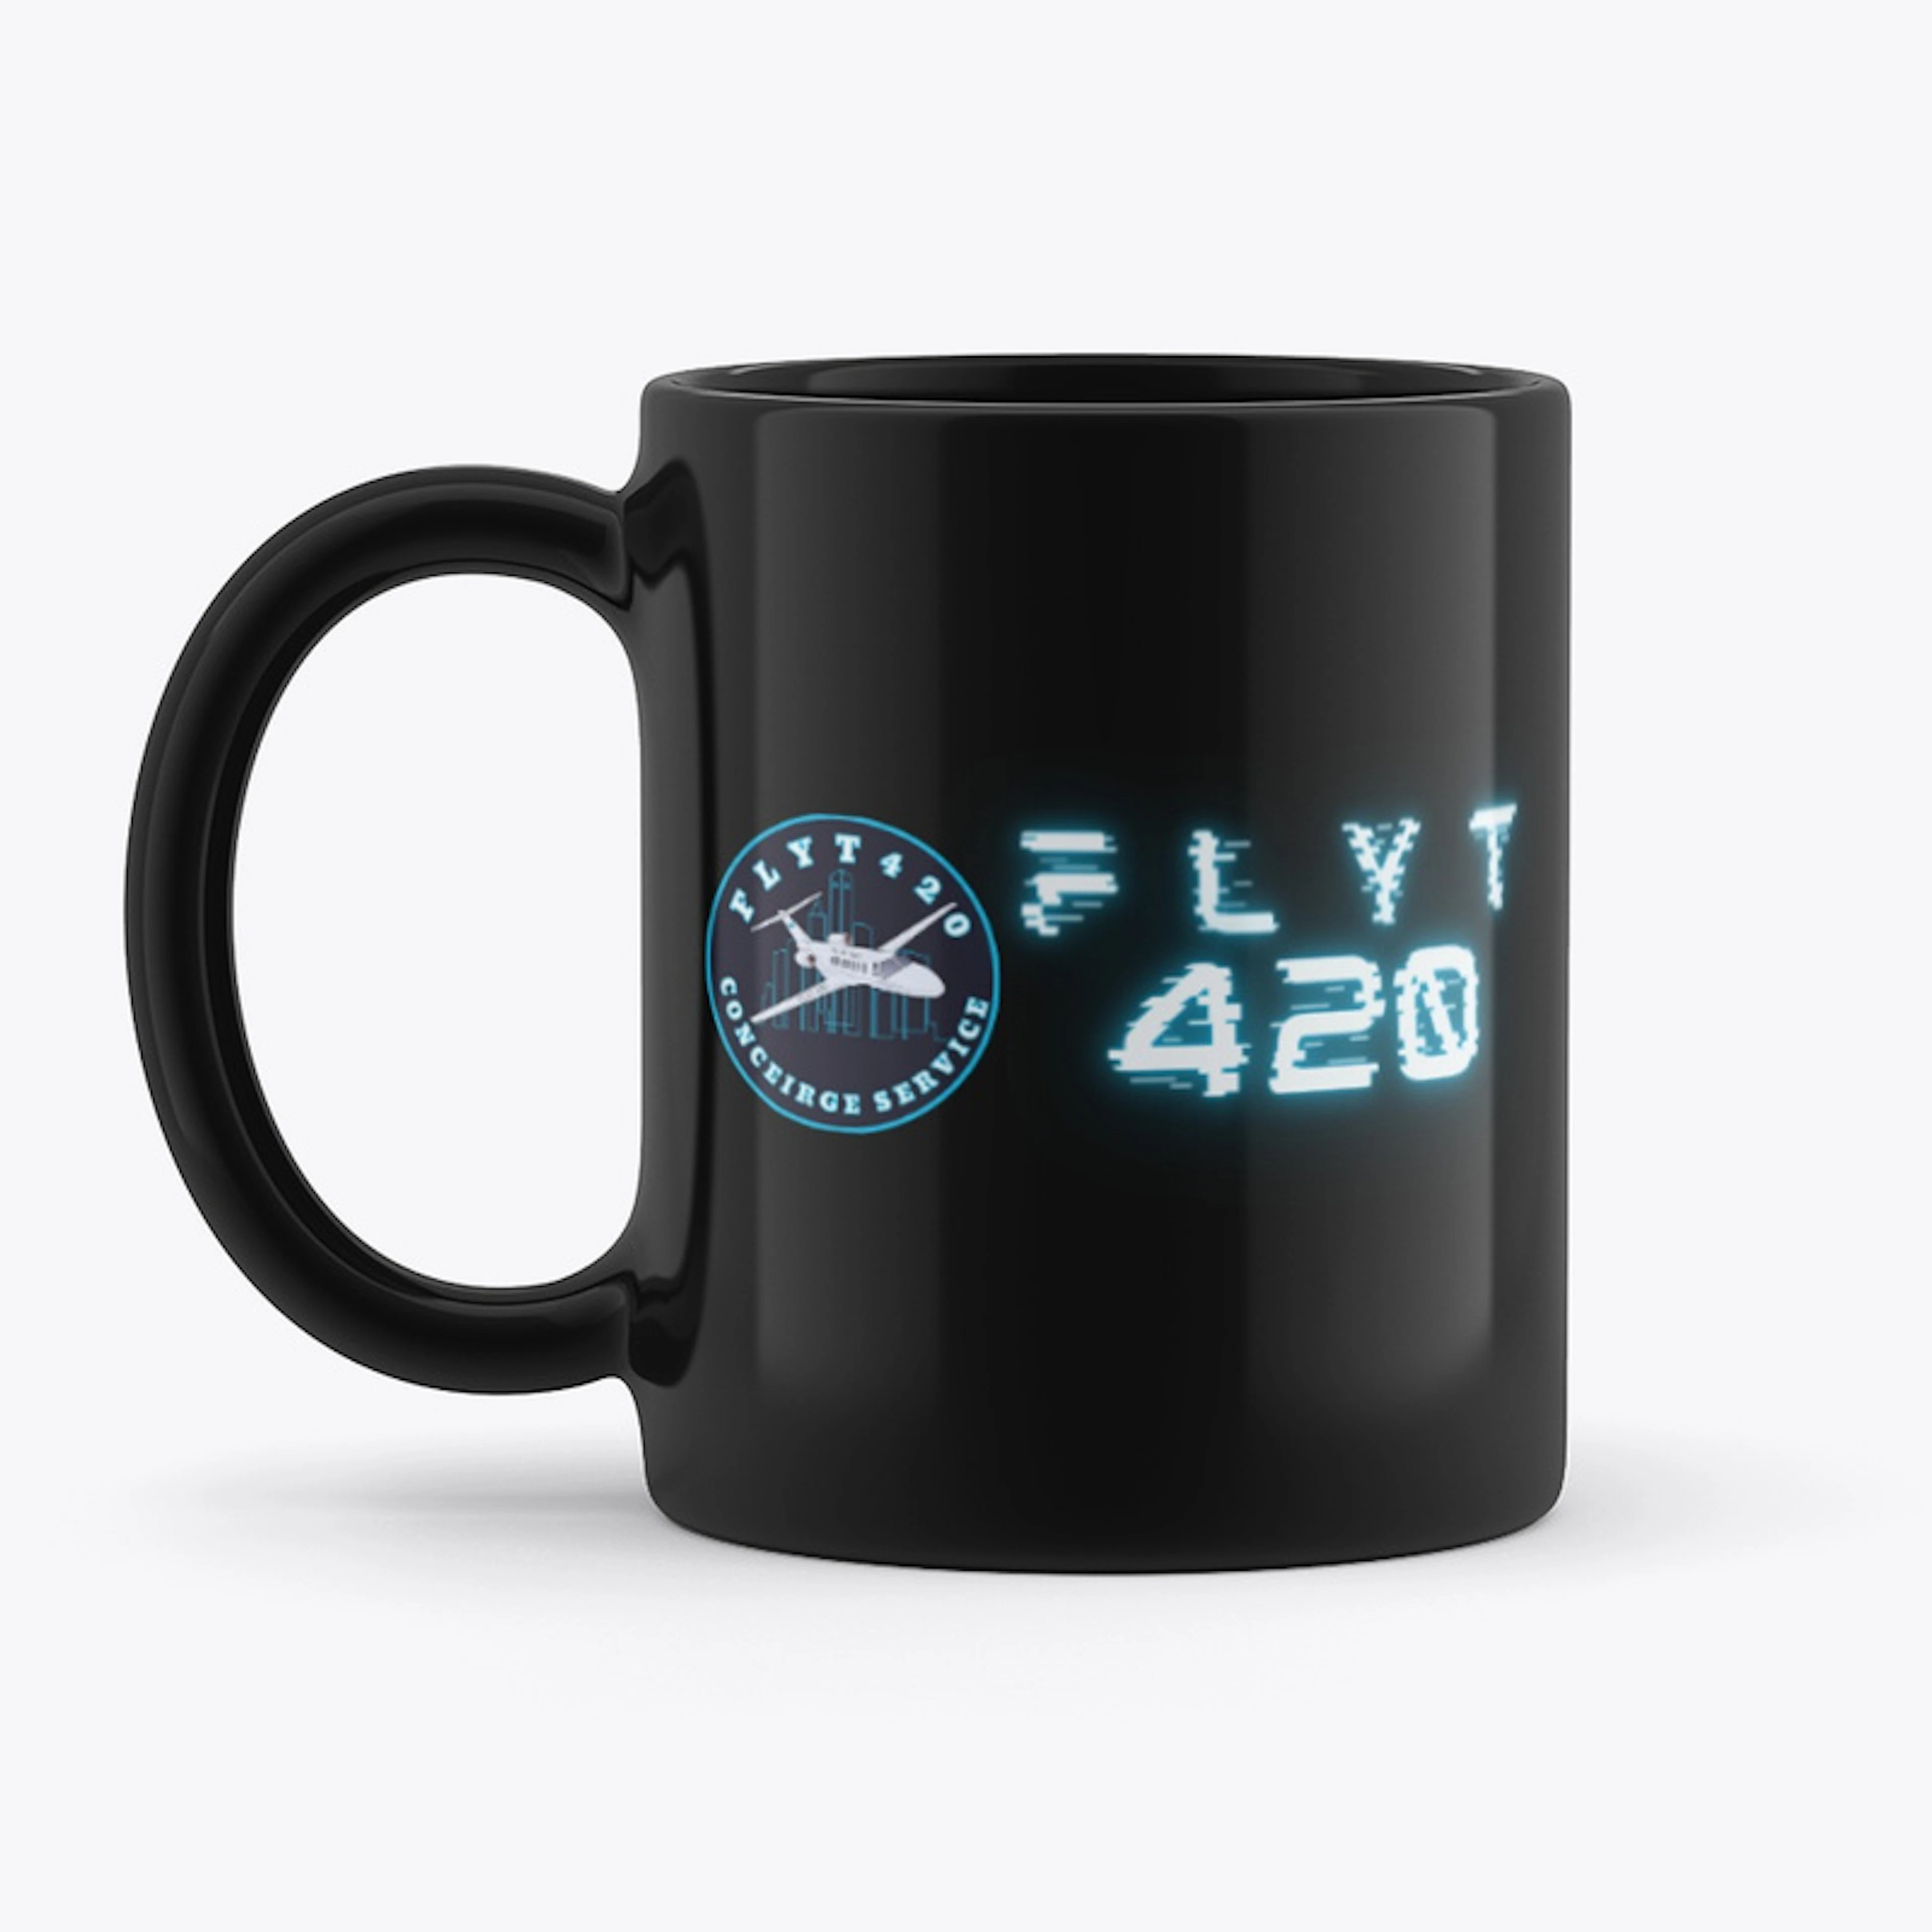 FLYT 420 COFFEE MUG